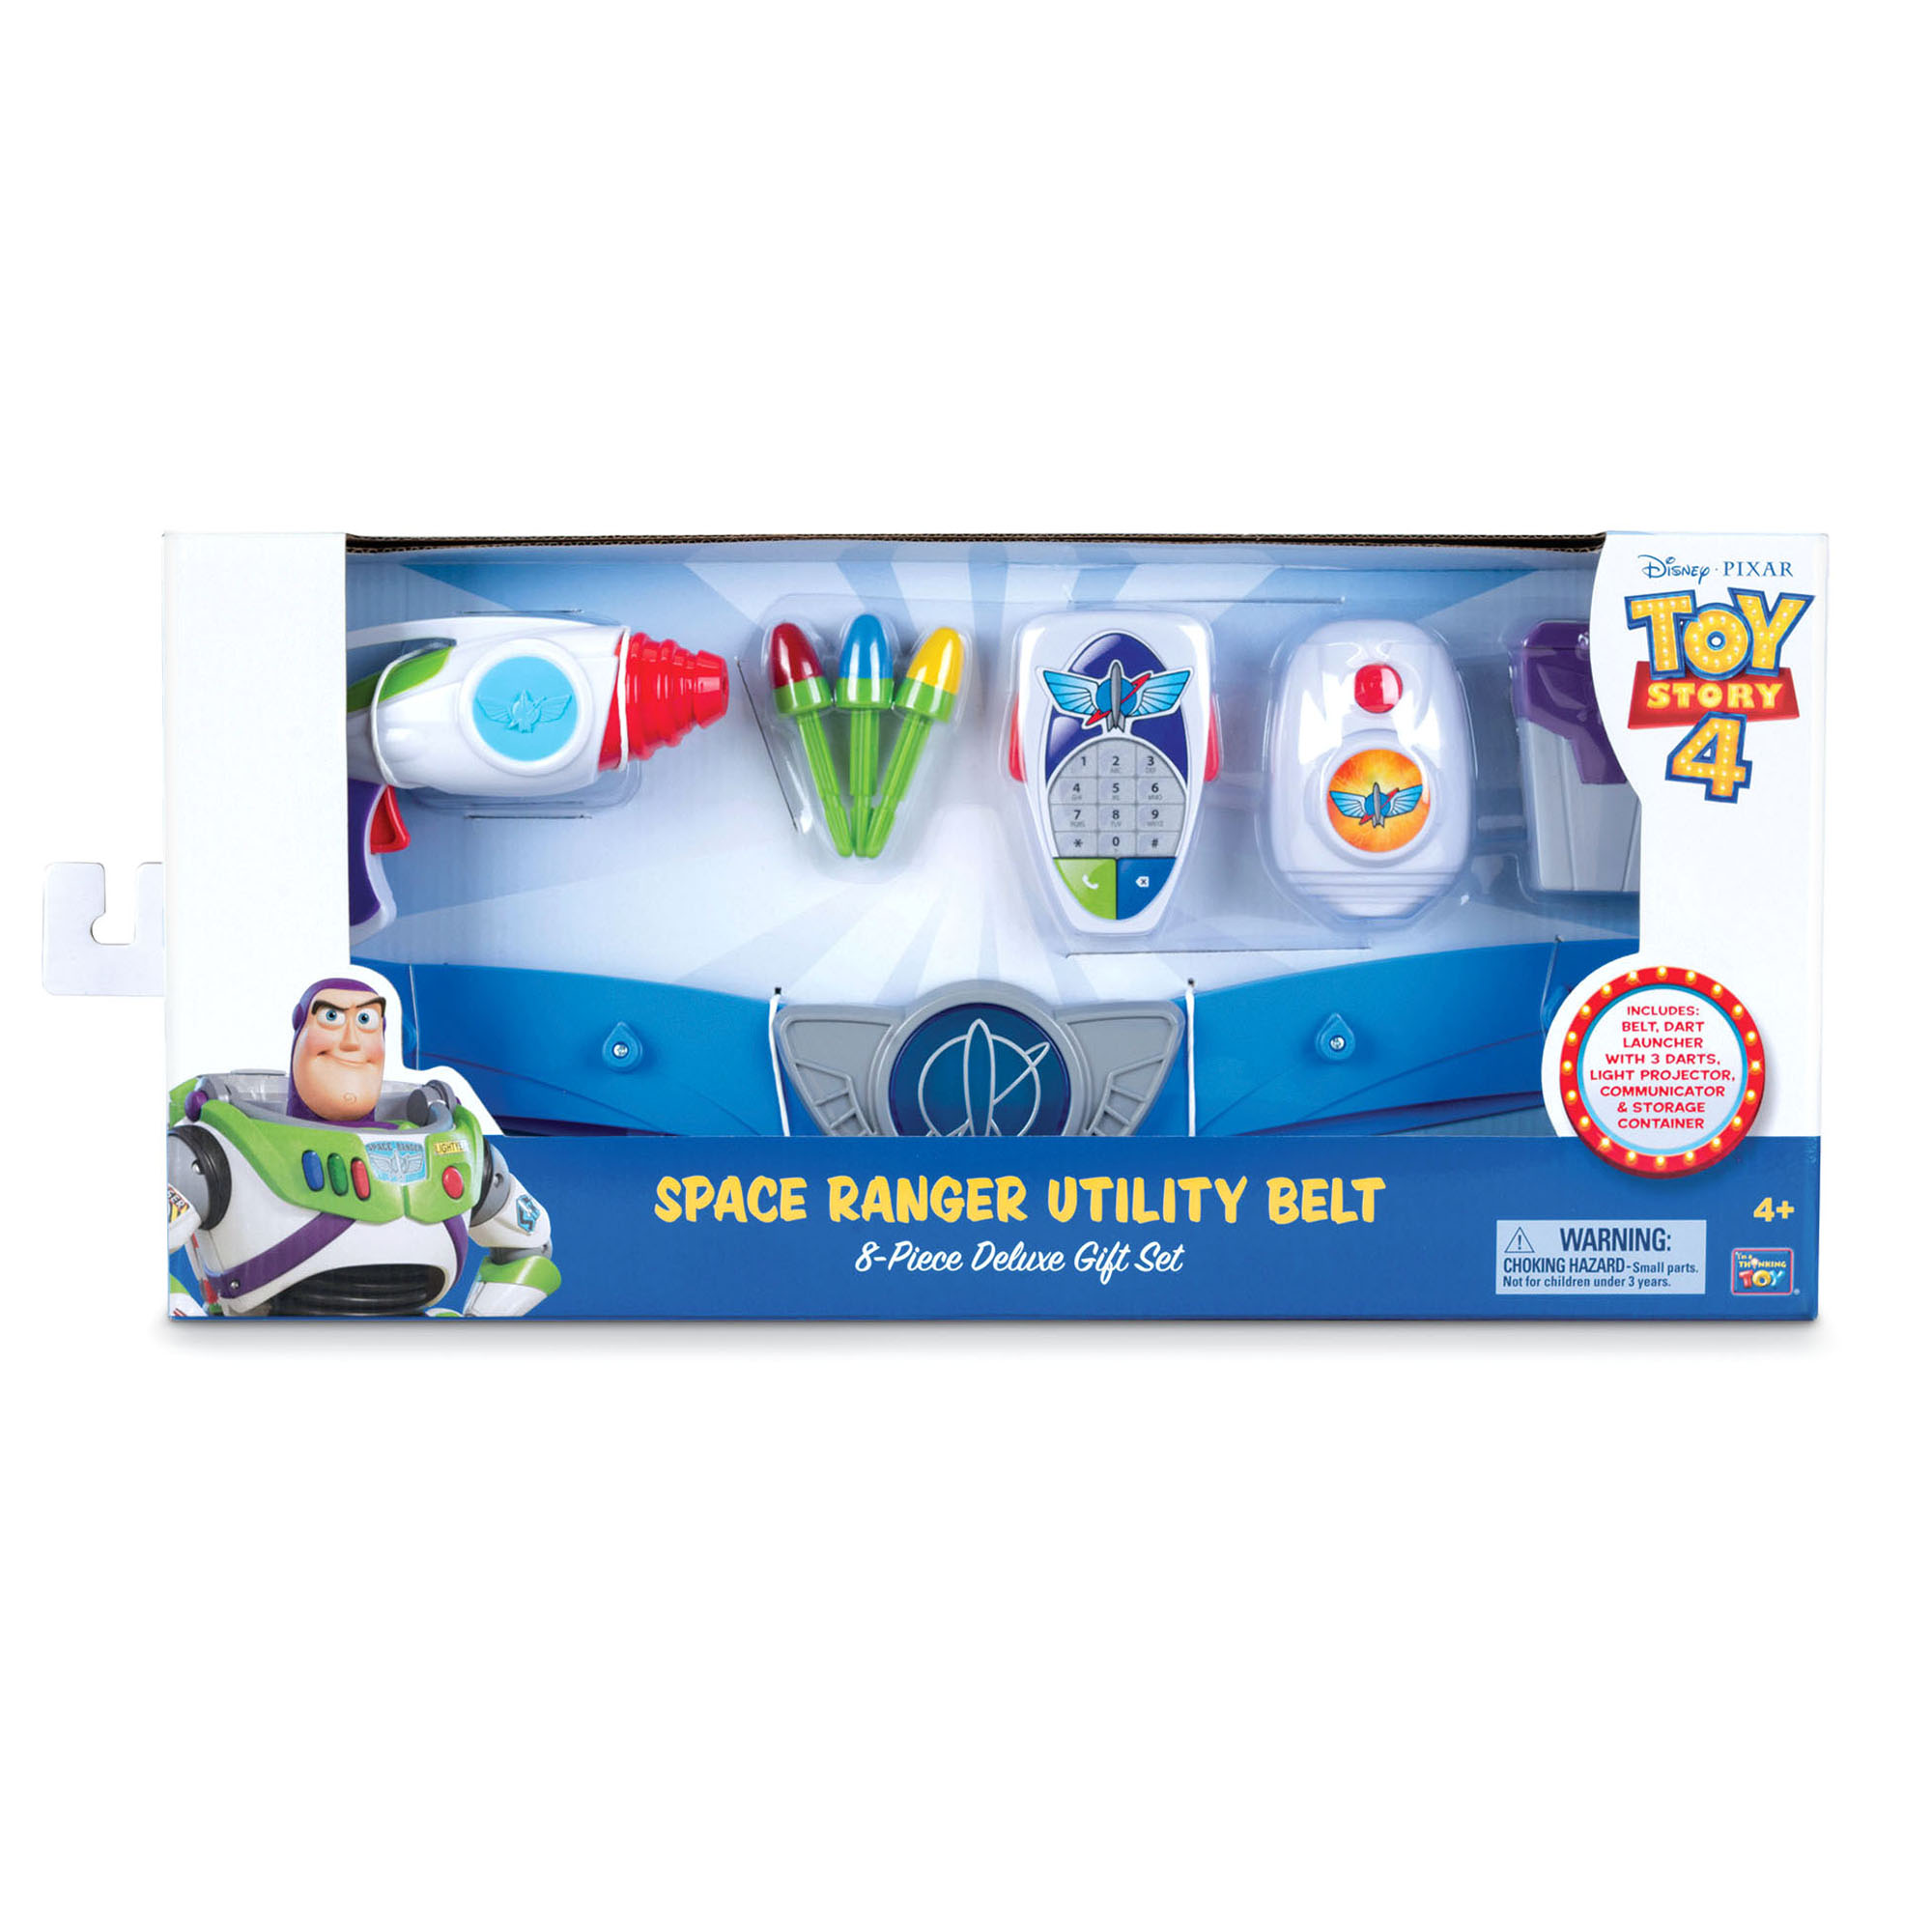 Disney Pixar Toy Story SPACE RANGER UTILITY BELT 8-Piece Deluxe Gift Set - image 5 of 5